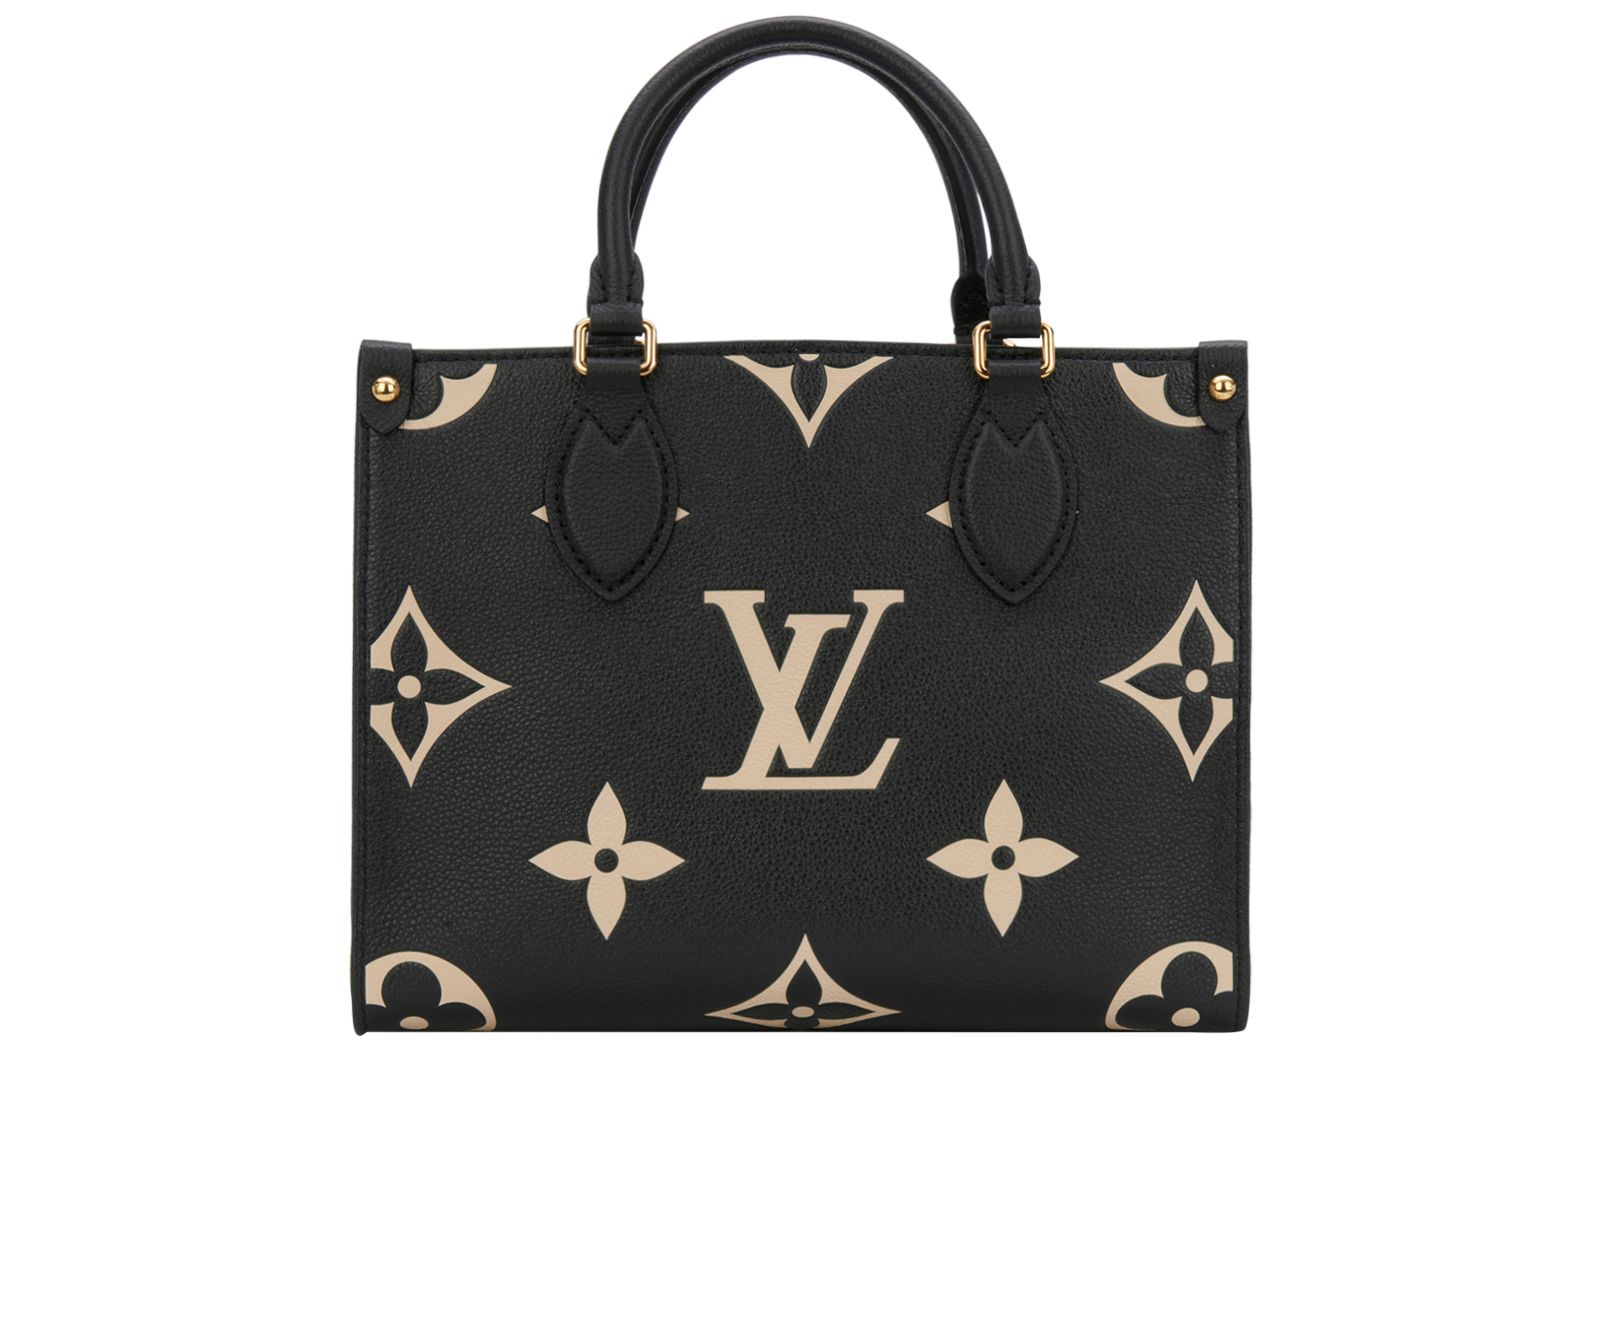 Designer Exchange Ltd - Say hello to our latest Louis Vuitton